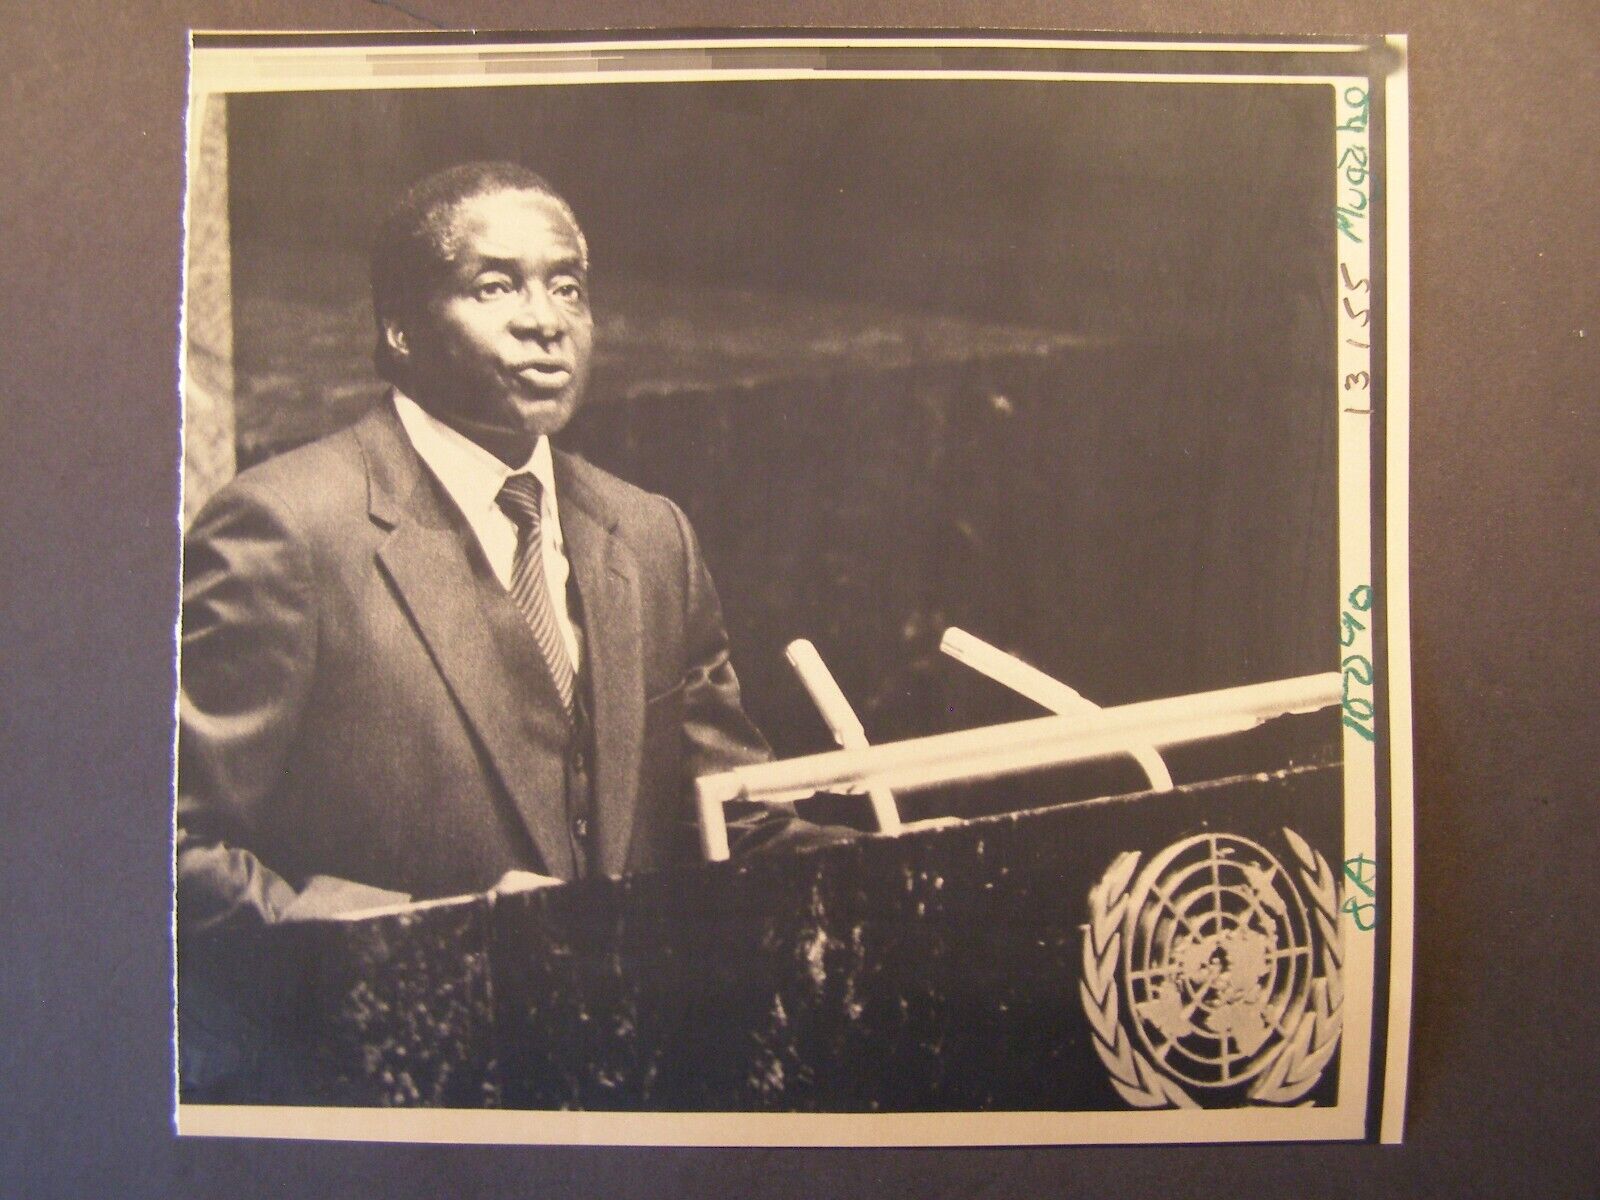 AP Wire Press Photo 1980 Robert Mugabe PM designate of Britain's African Colony